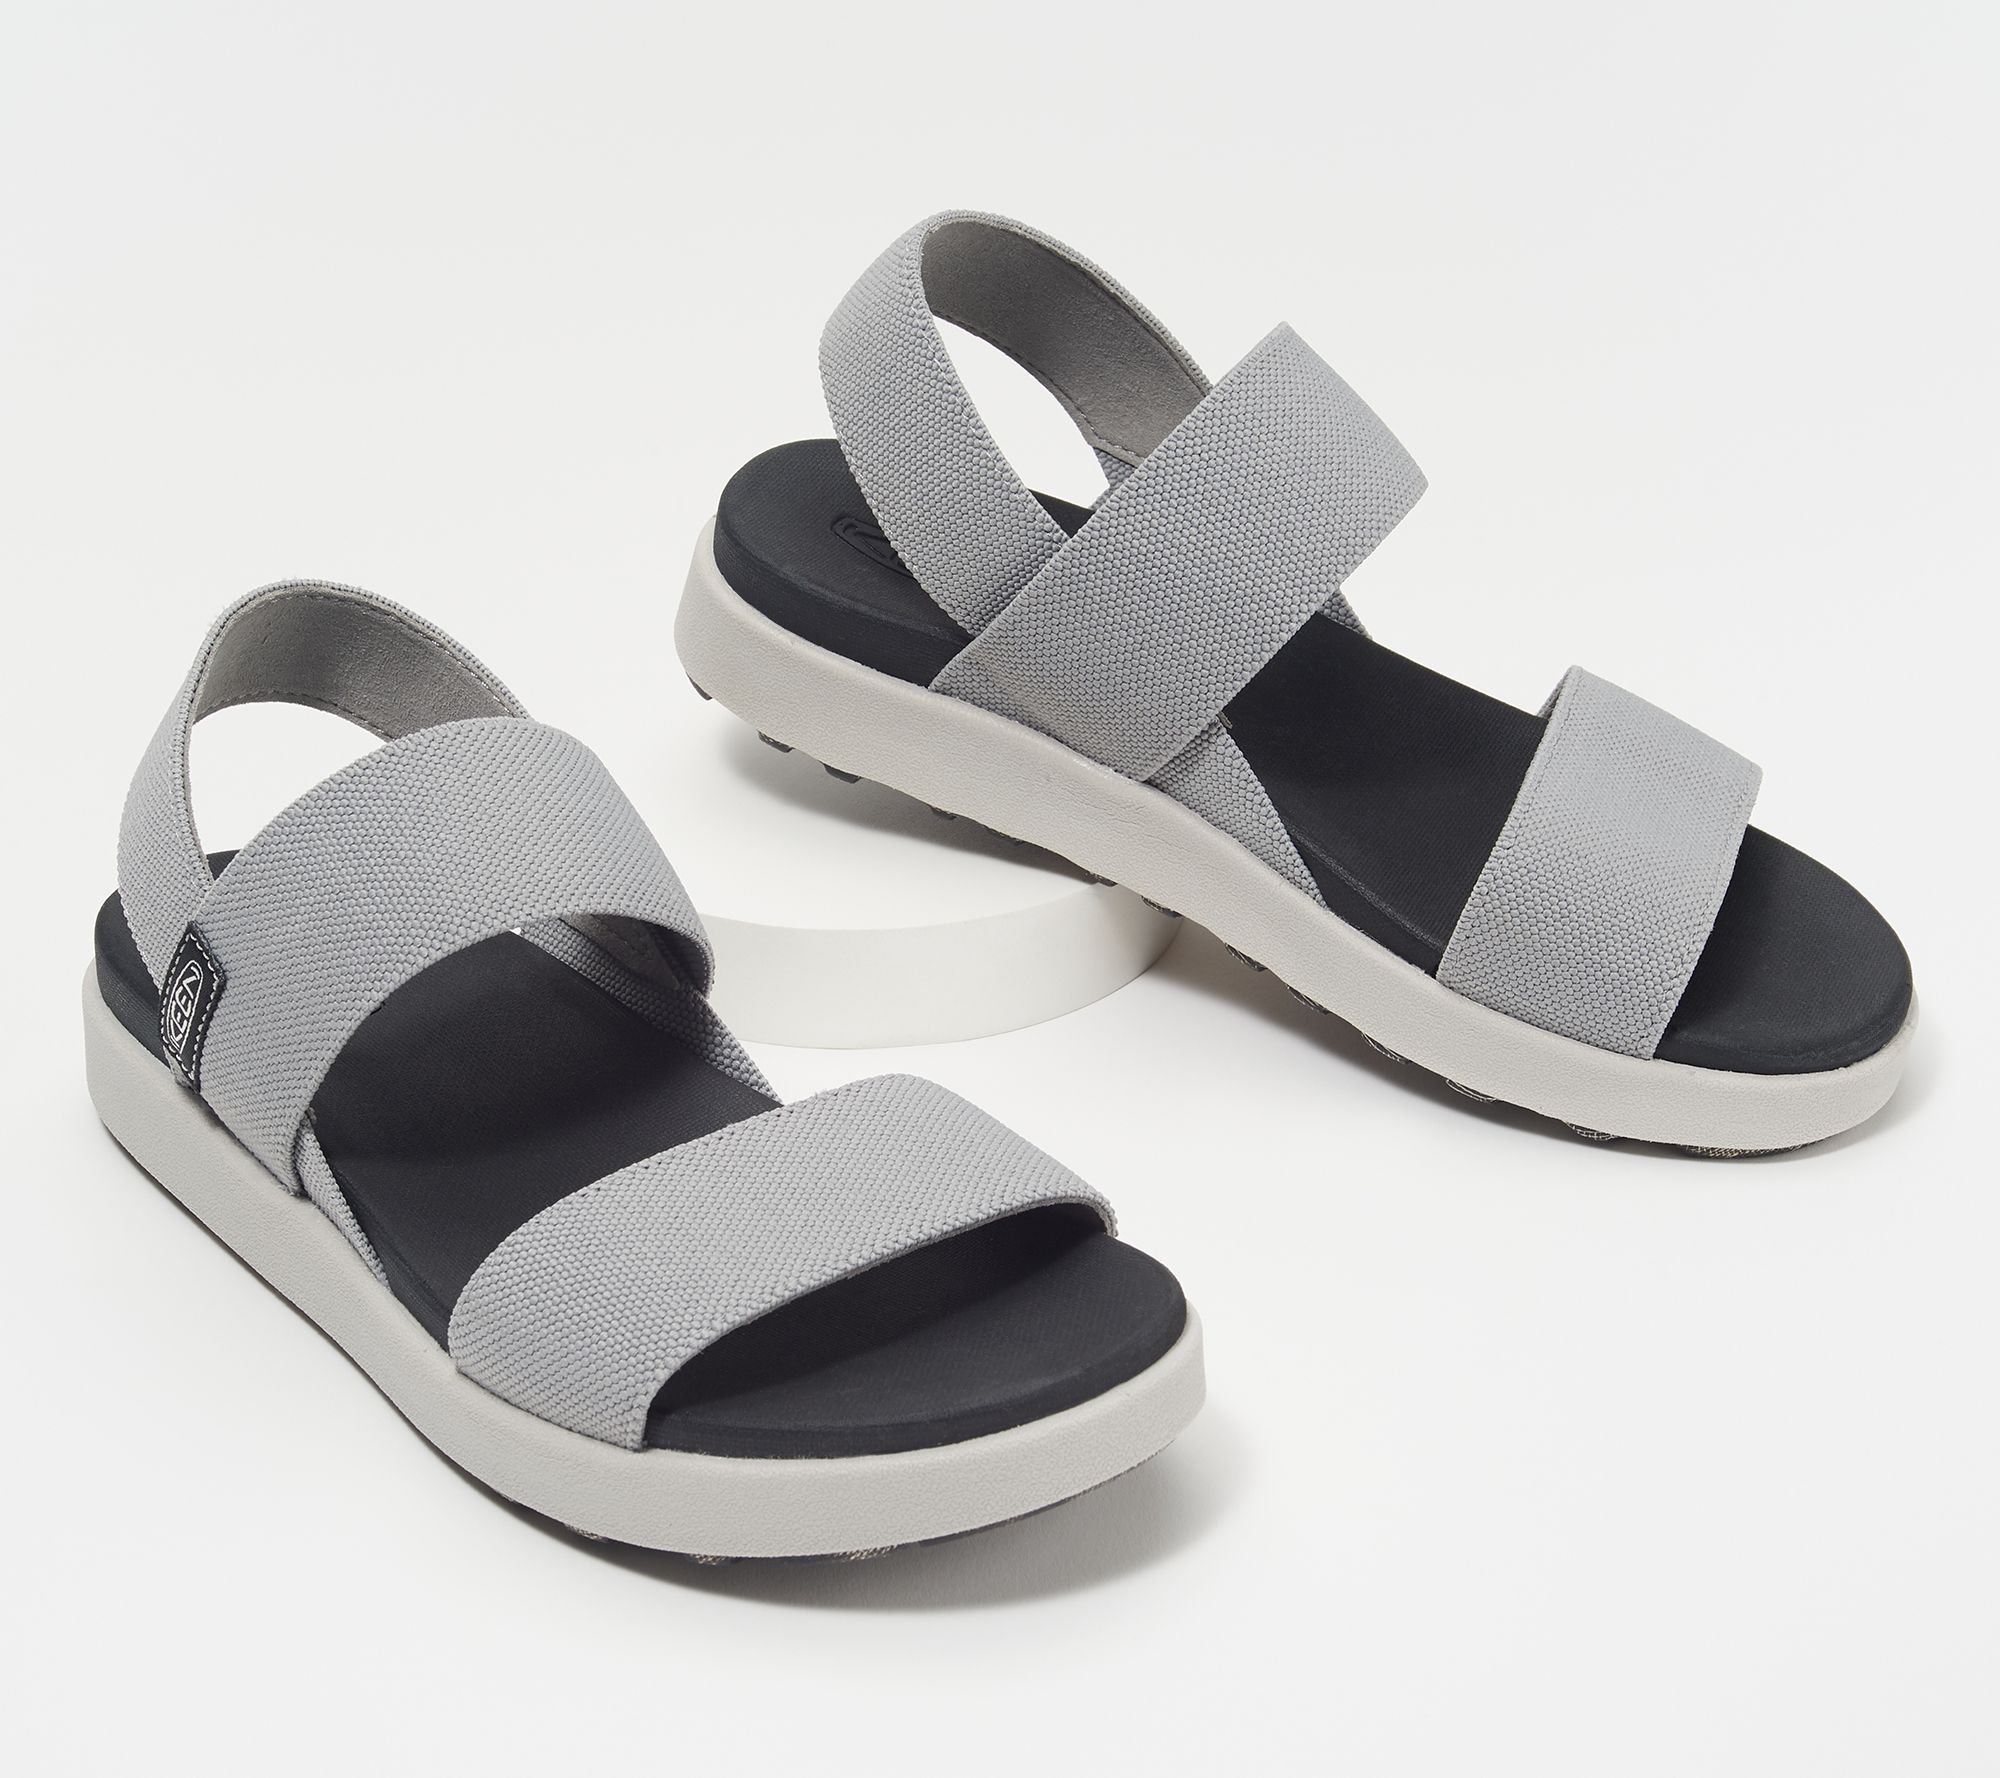 KEEN Strap Sport Sandals - Elle Backstrap - QVC.com